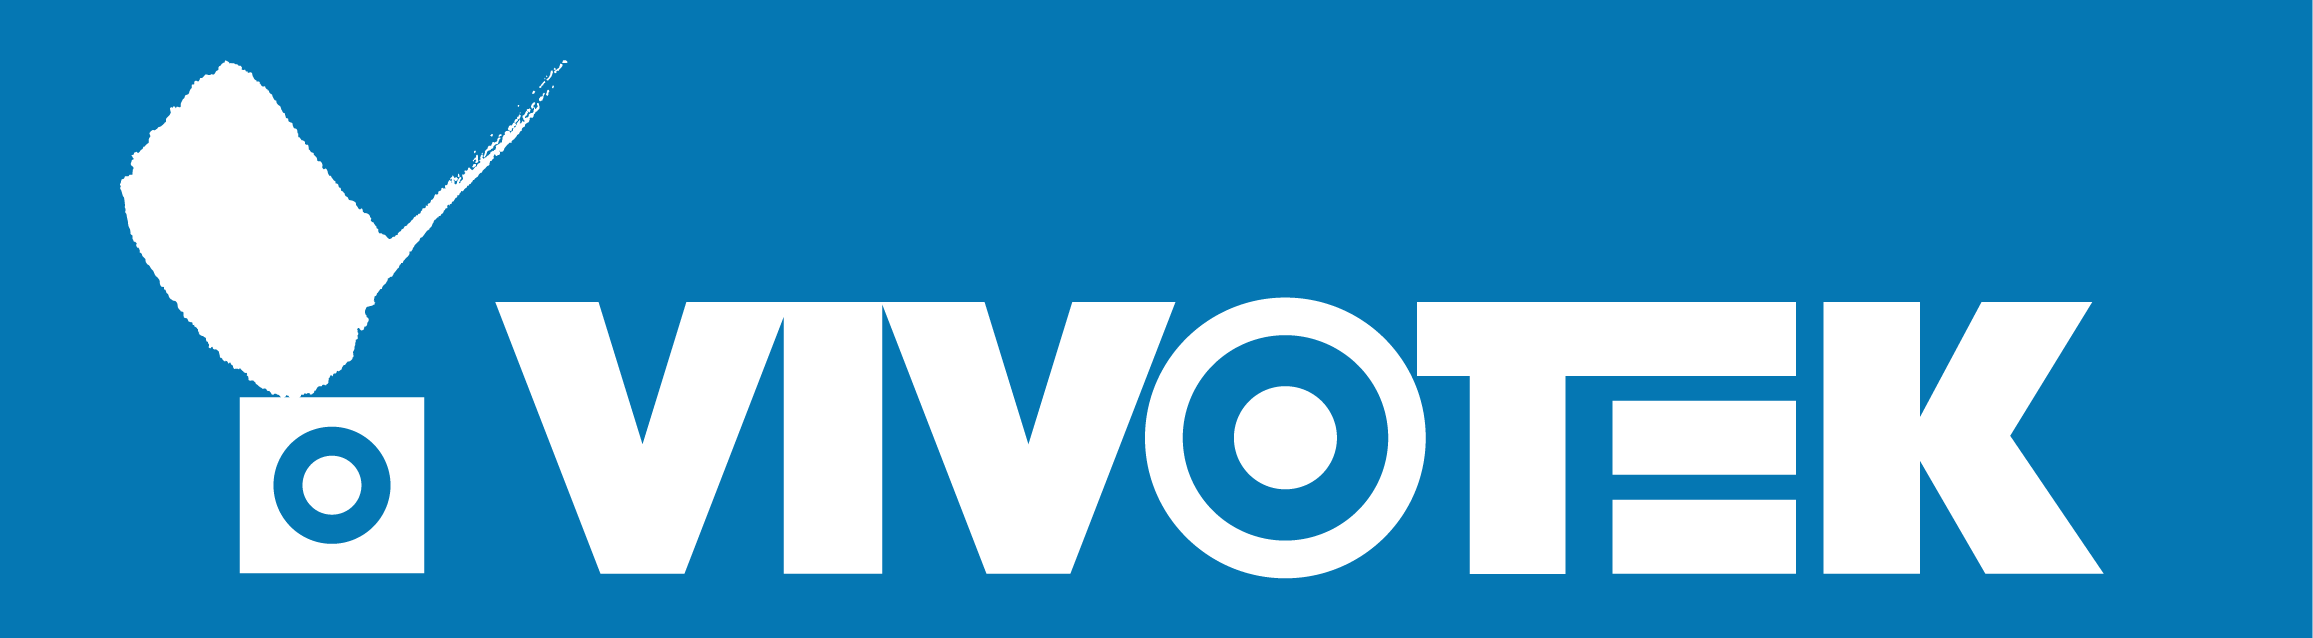 VIVOTEK Logo - Buy VIVOTEK brand products from ₪0 in online shop TopMarket in Israel.